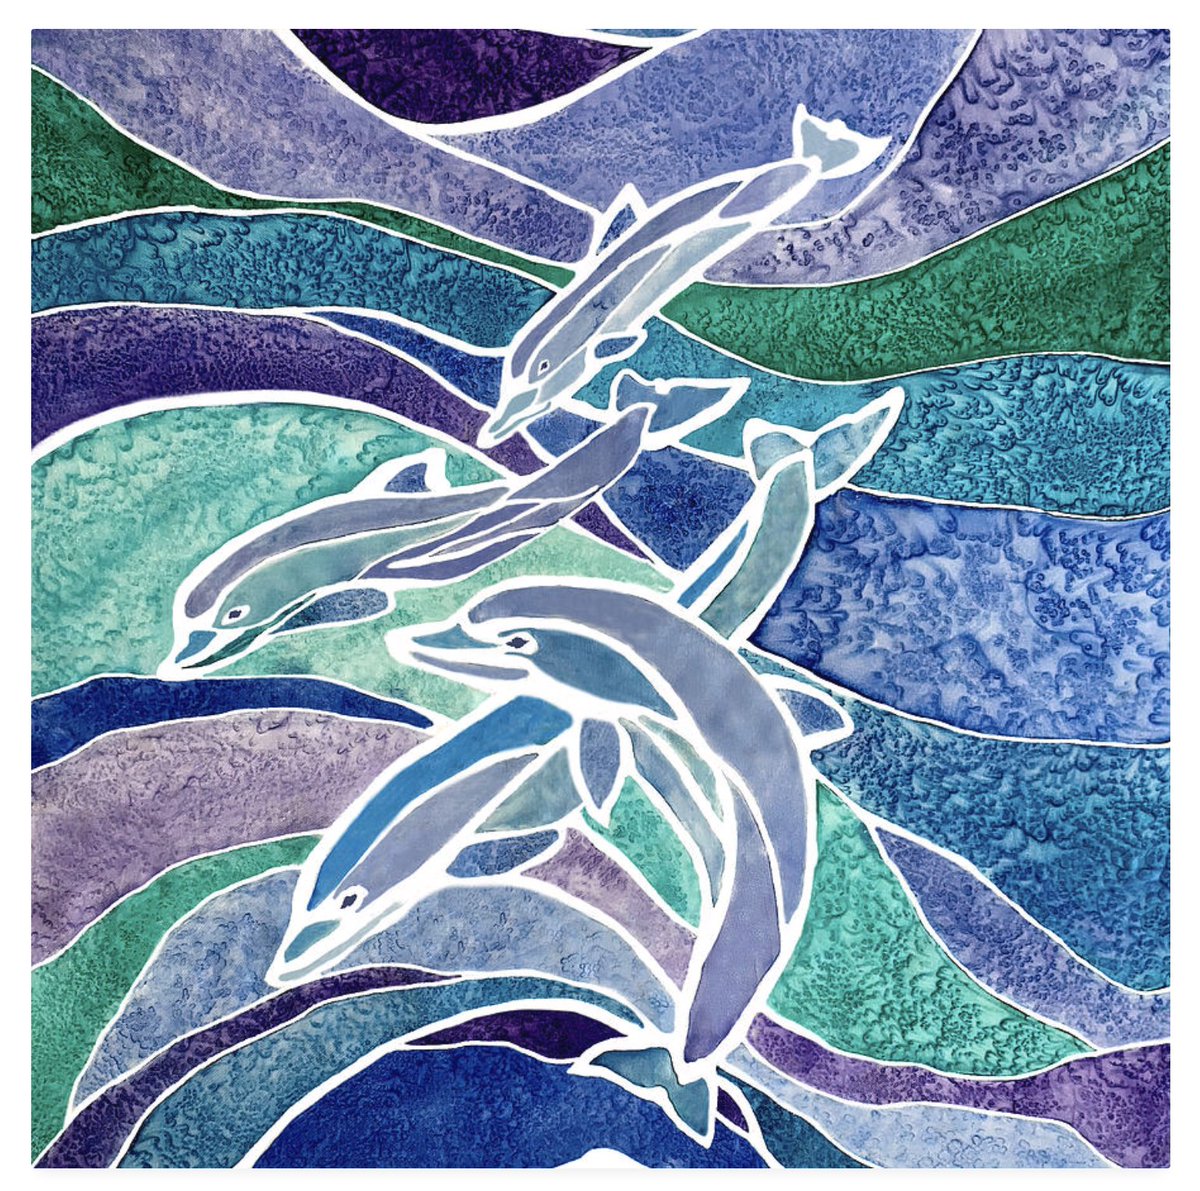 Playful Dolphins Batik #artprint #wallart #homedecor  #buyintoart #AYearForArt #sealife #dolphins #naturelovers #costalart #underthesea #batikart #artlastsforever #tropicalstateofmind #dolphinart #tropicalart #playfuldolphins #art #ArtistOnTwitter 

ART - deborah-league.pixels.com/featured/four-…